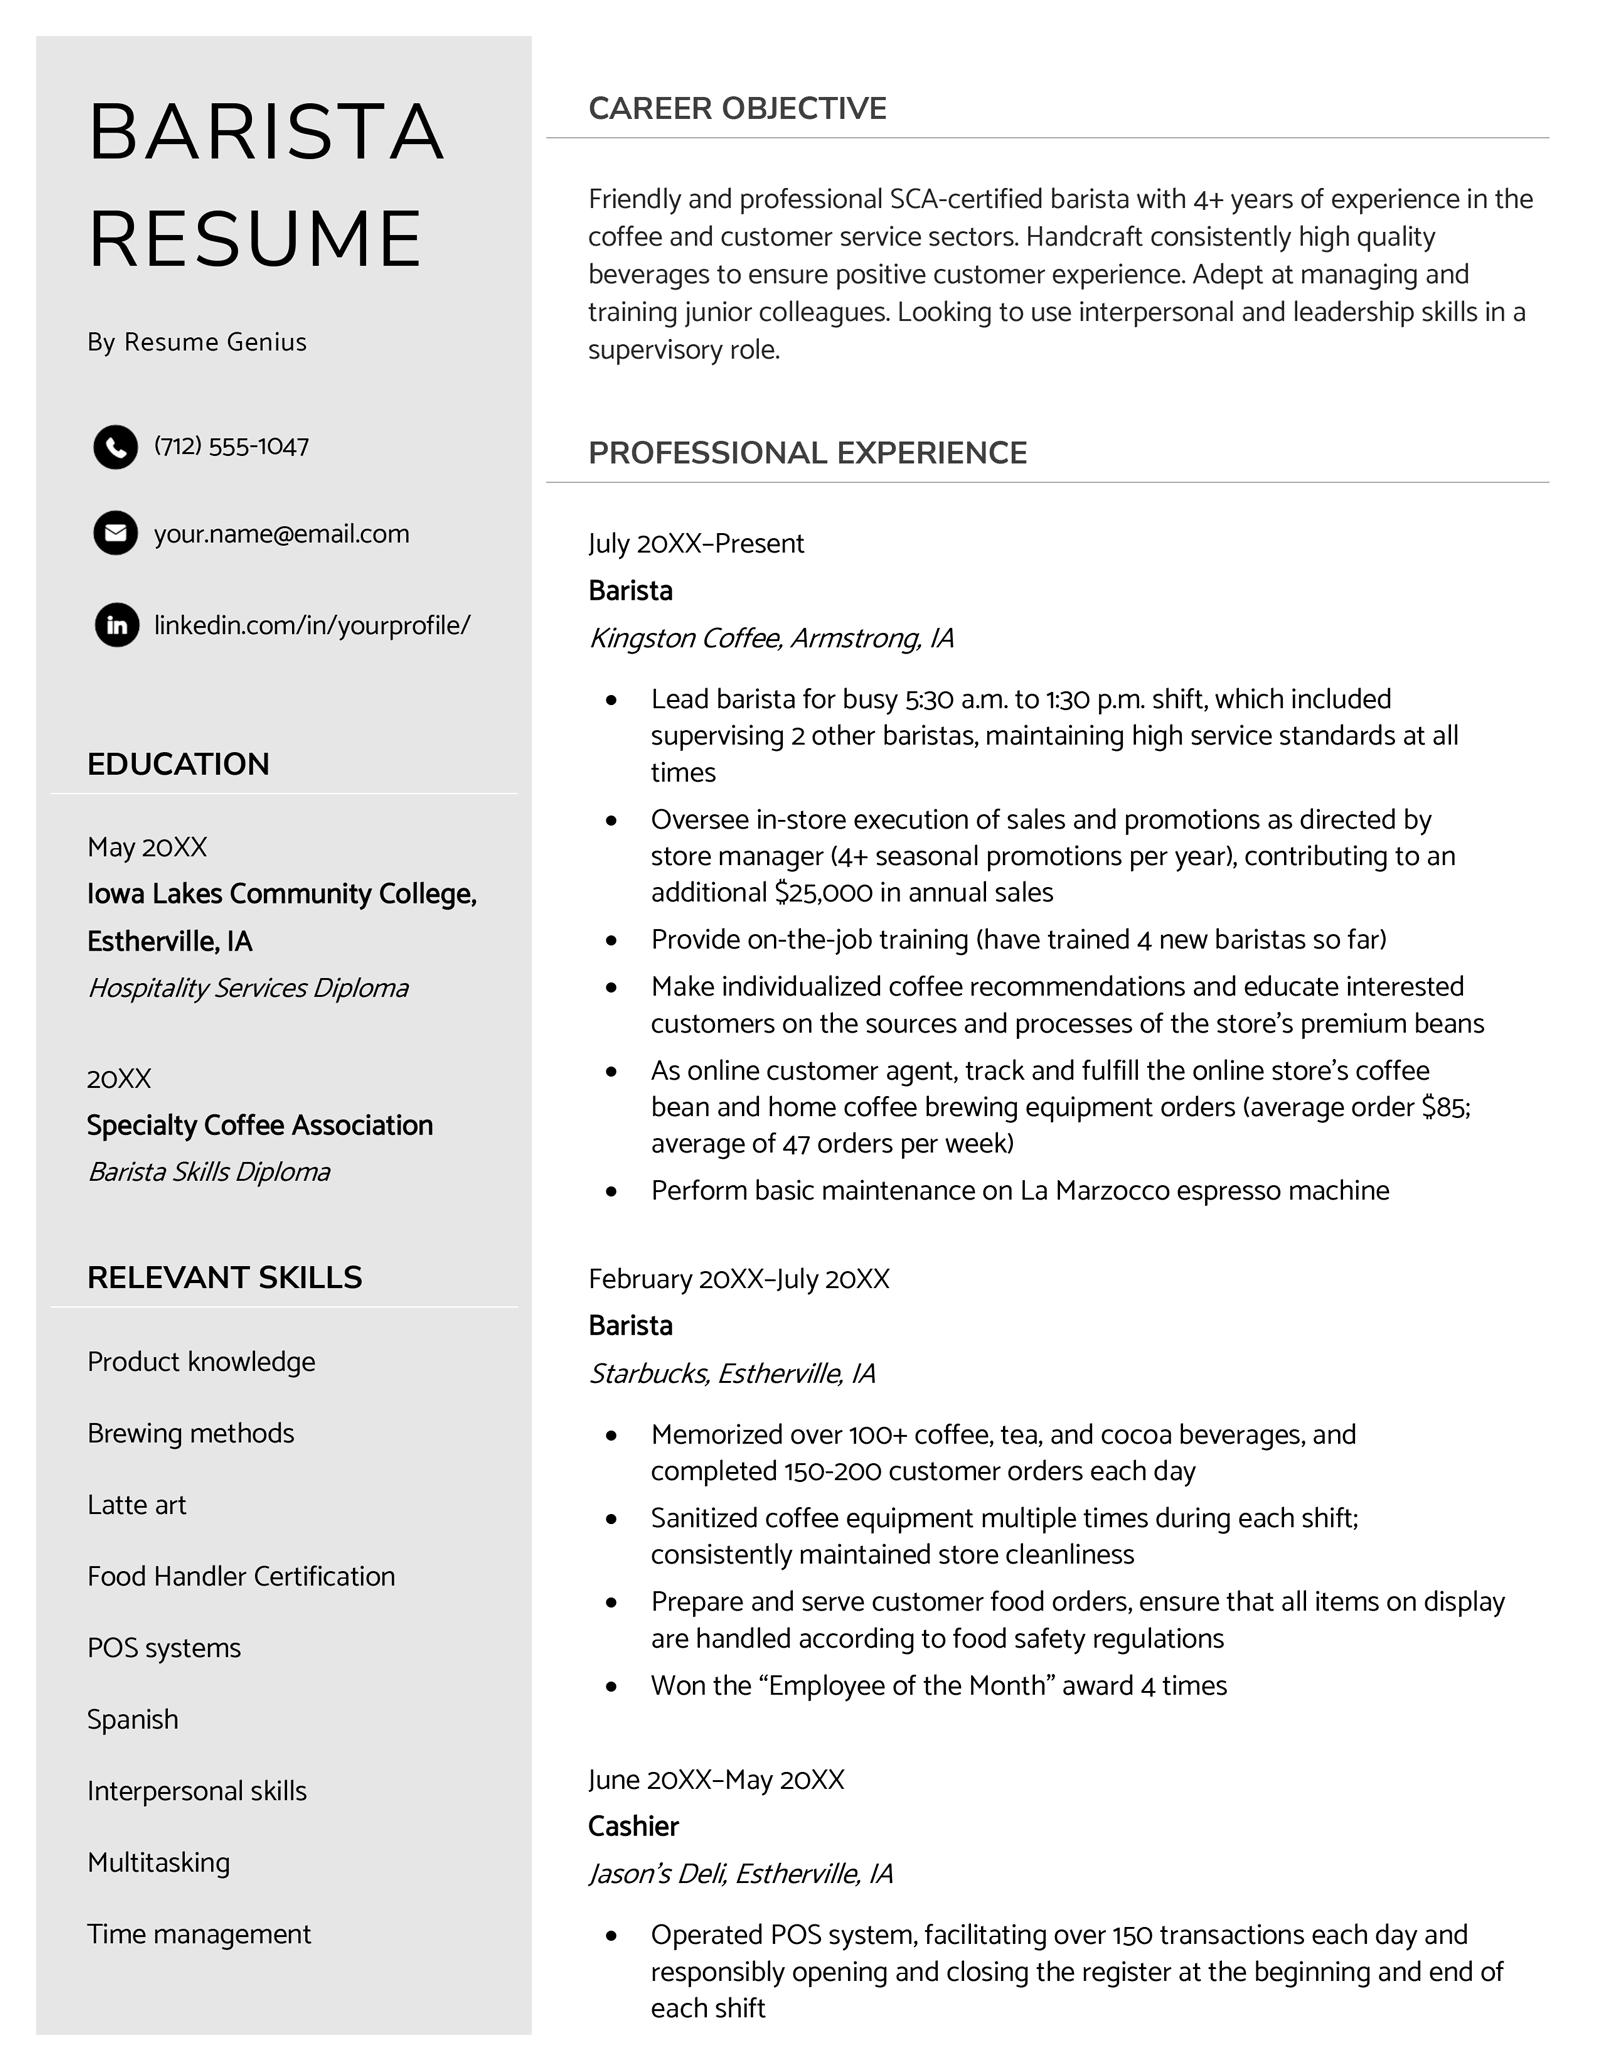 job description of starbucks barista for resume